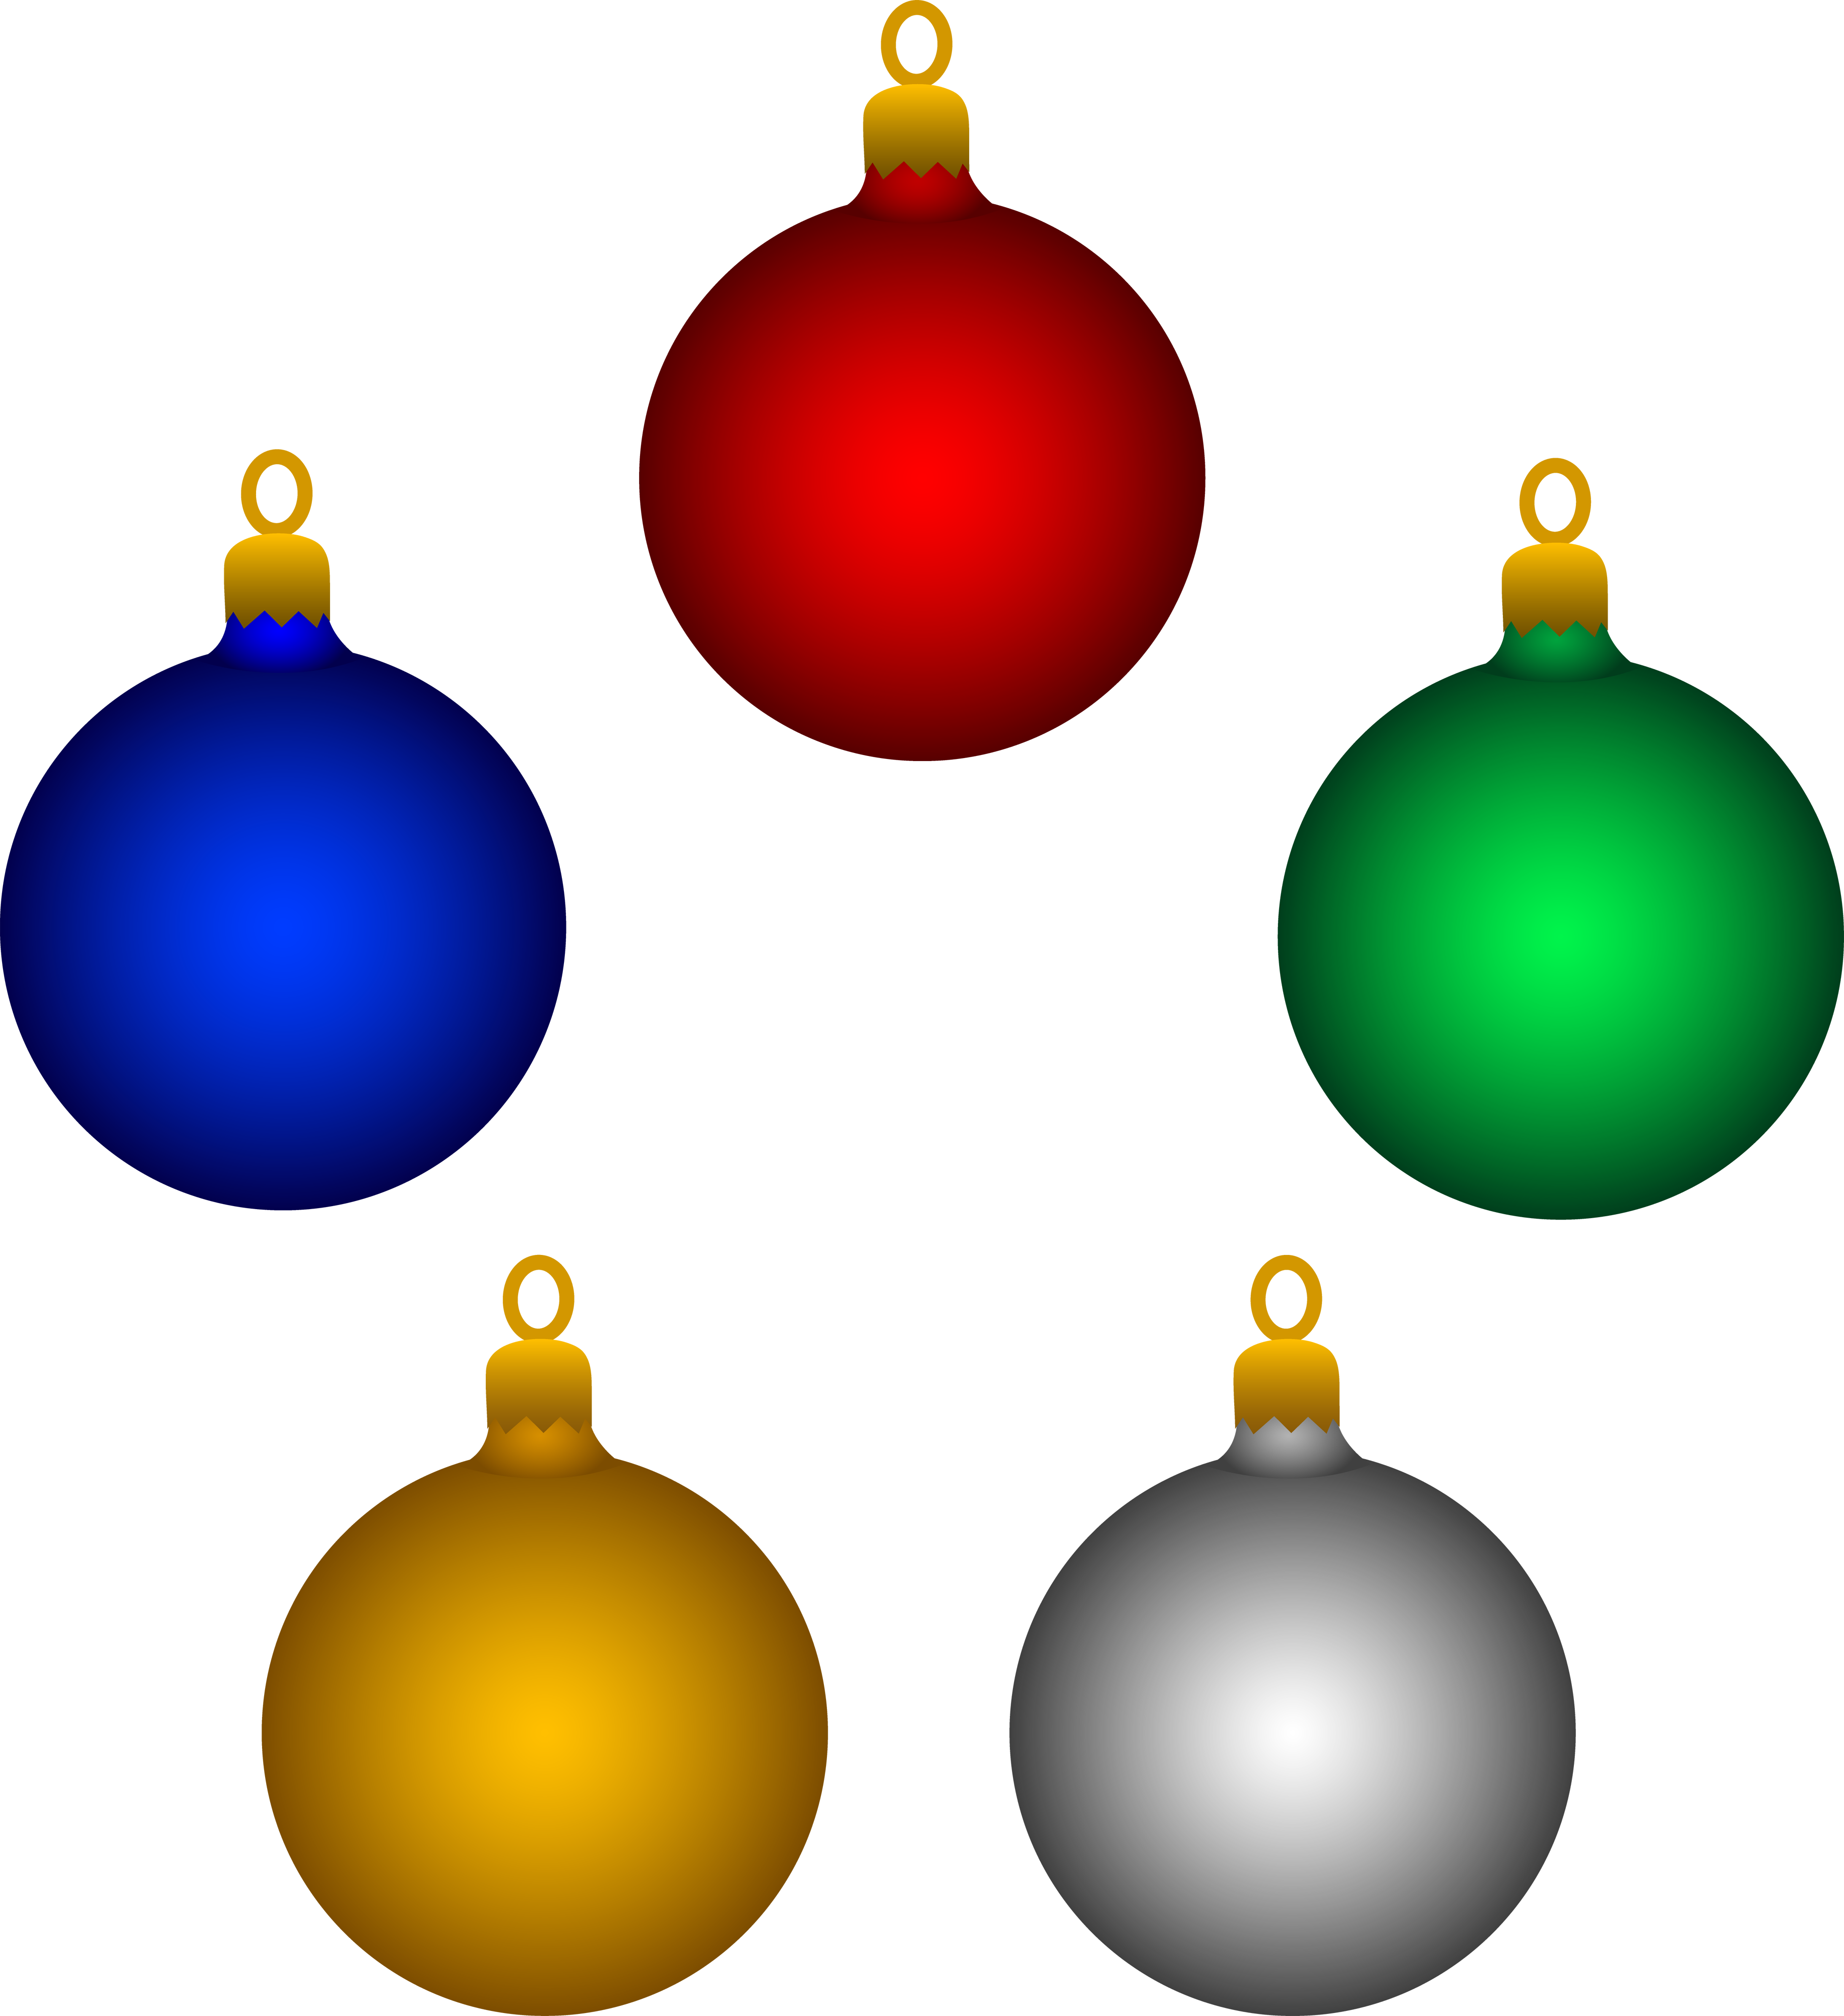 Ornament Clip Art - Christmas Decorations Clipart